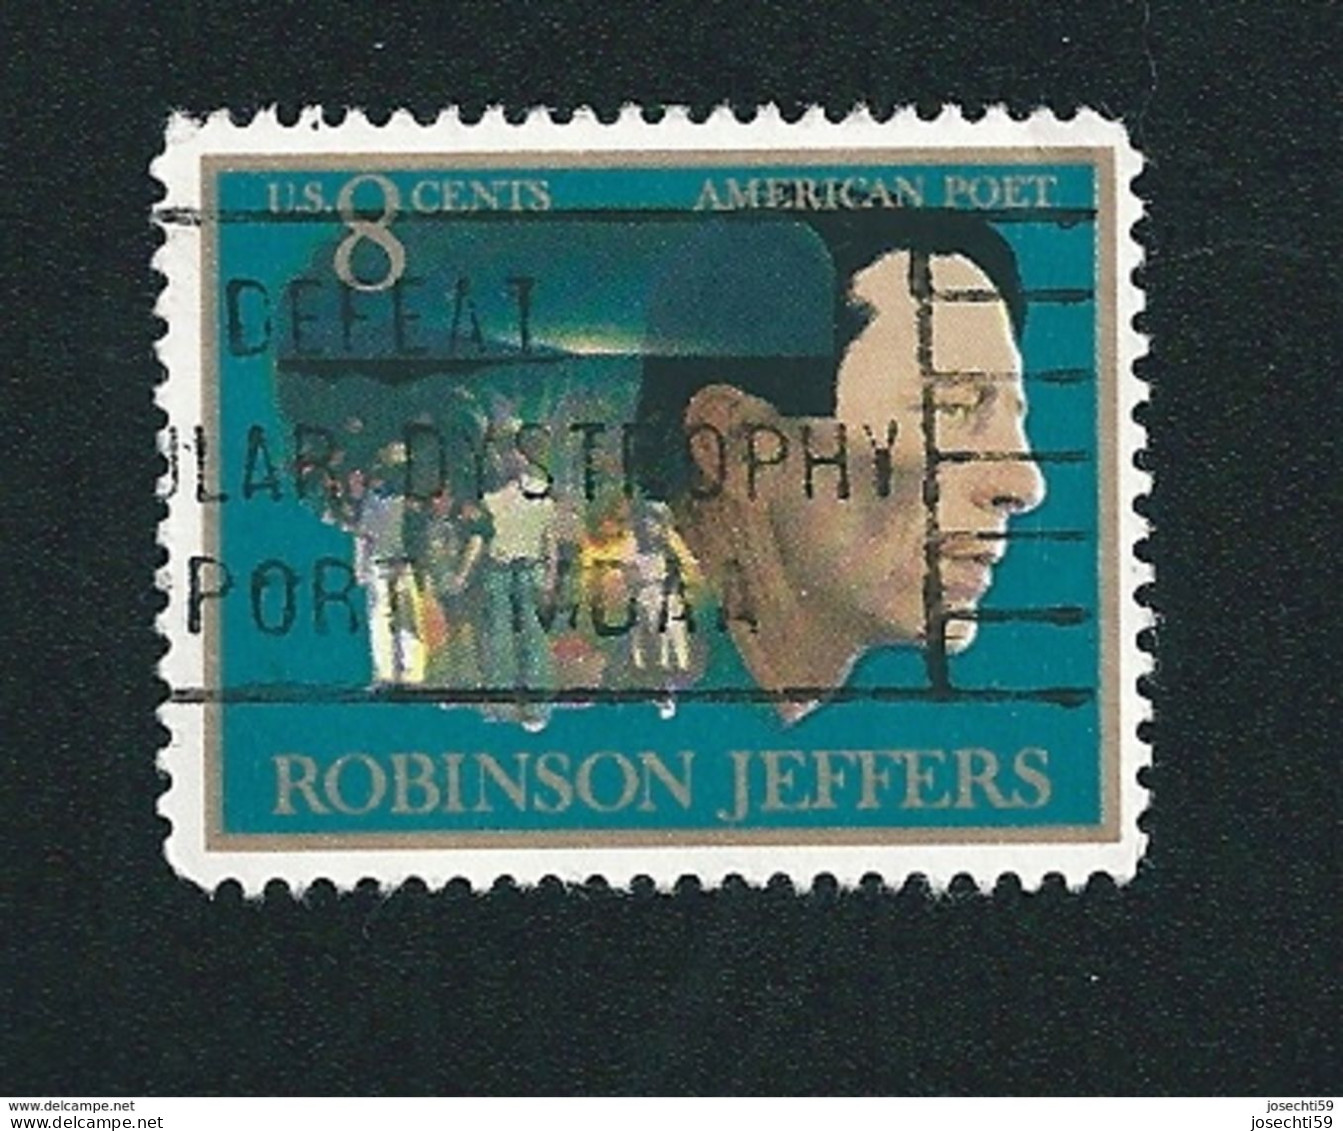 N° 1002 John Robinson Jeffers (1887-1962), American Poet   Timbre Etats-Unis (1973)   Oblitéré - Usati